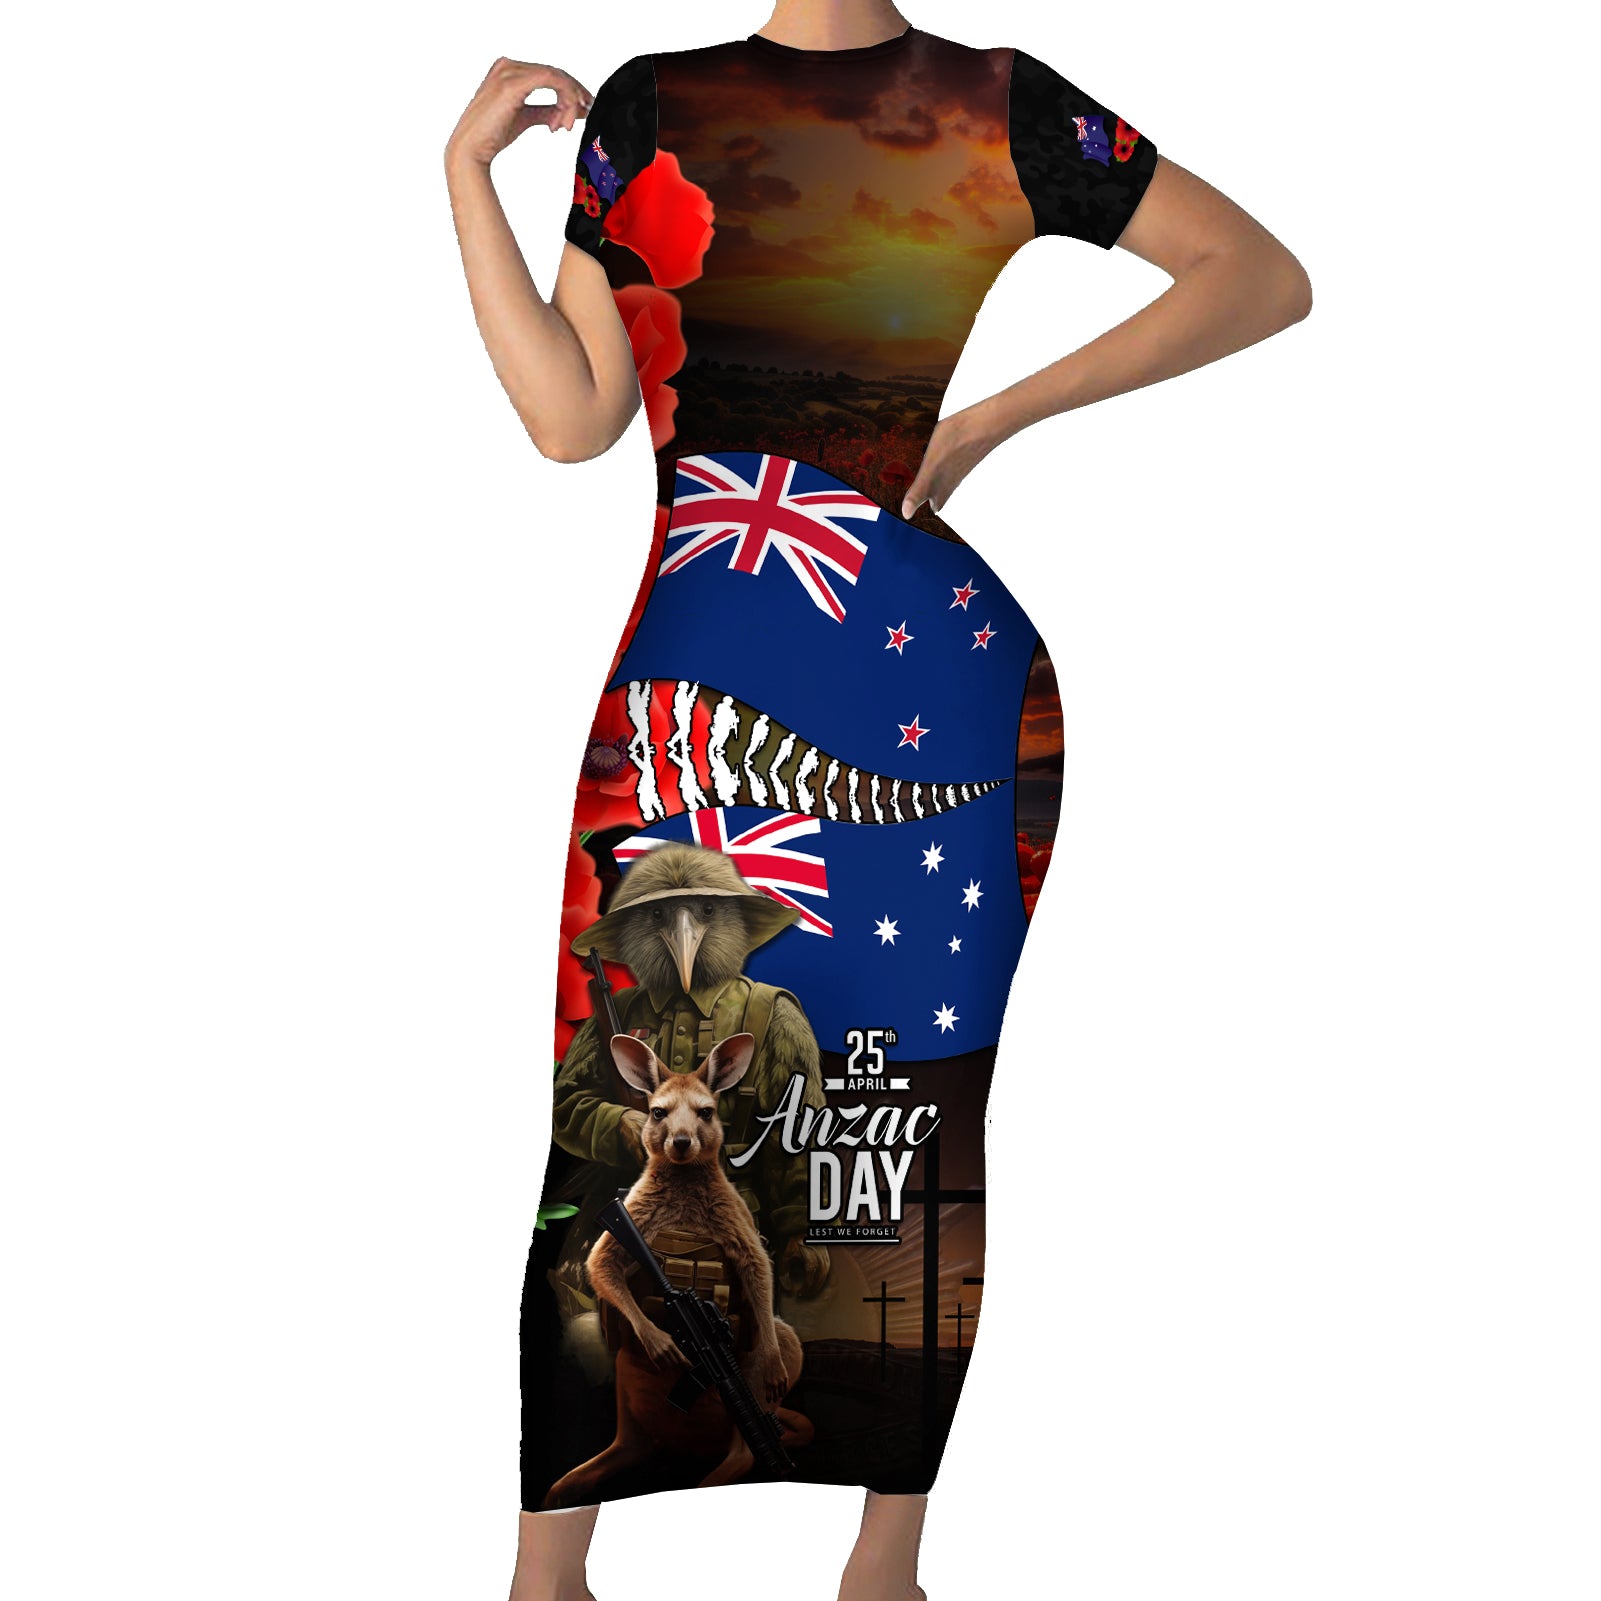 New Zealand and Australia ANZAC Day Short Sleeve Bodycon Dress National Flag mix Kiwi Bird and Kangaroo Soldier Style